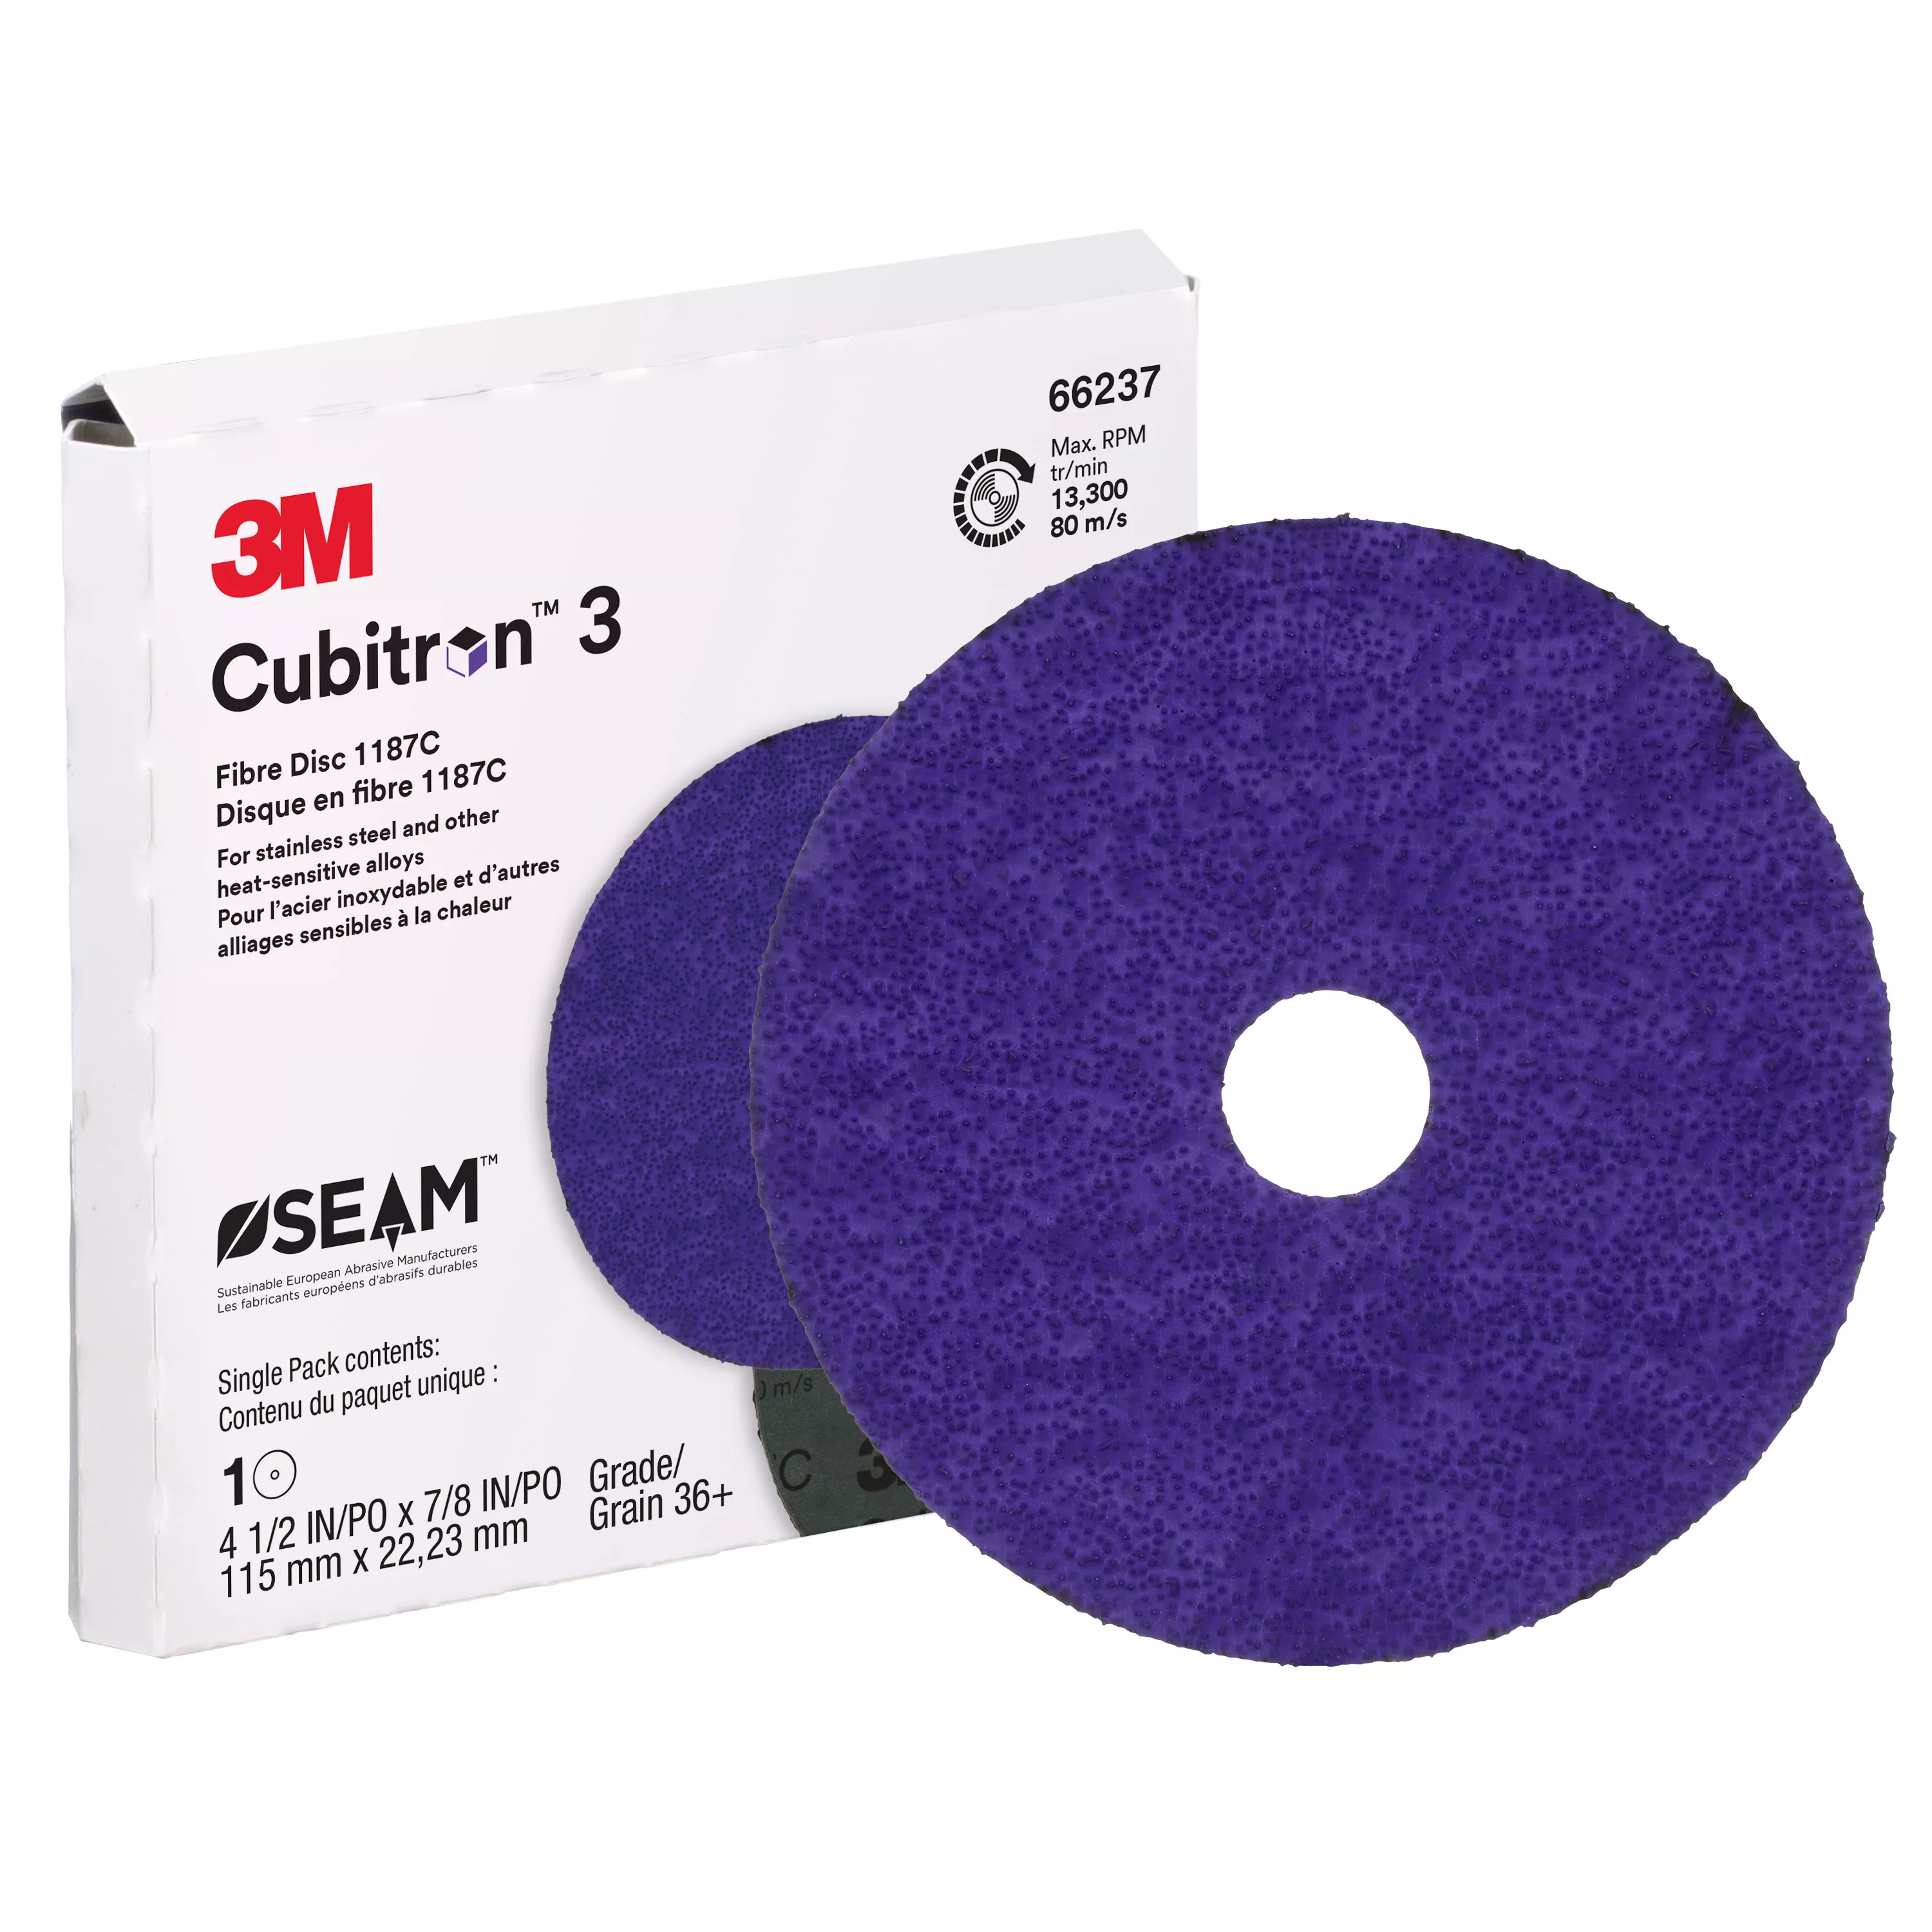 3M™ Cubitron™ 3 Fibre Disc 1187C, 36+, 4-1/2 in x 7/8 in, Die 450E, 10 ea/Case, Single Pack